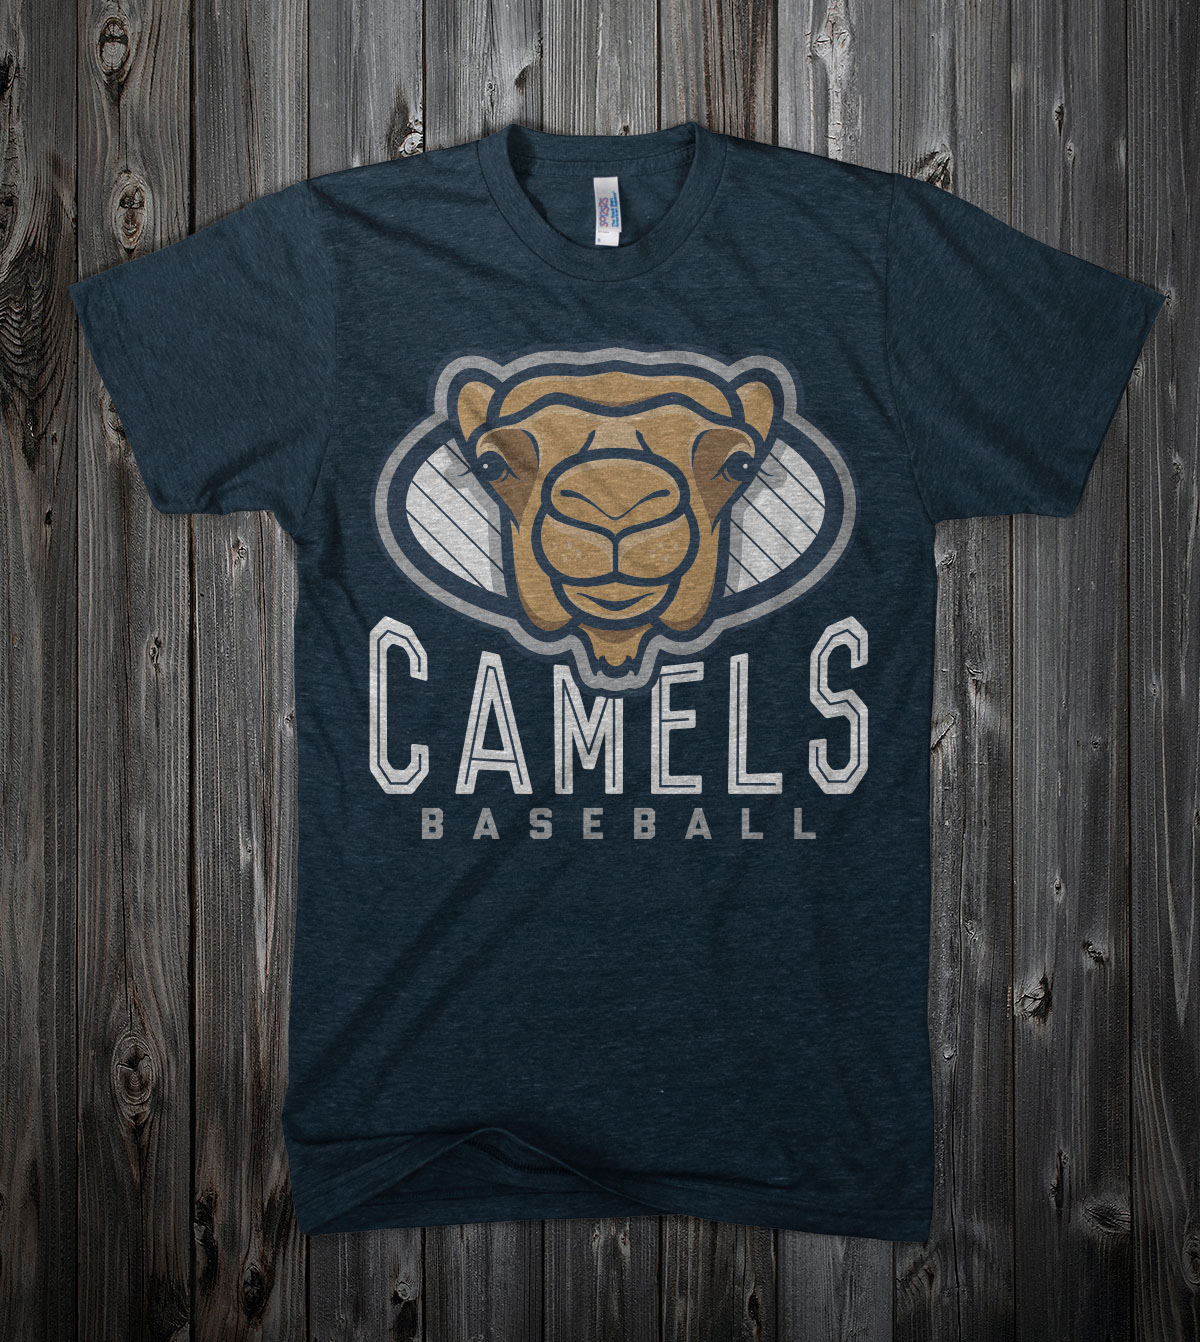 Illustrator adobe camel baseball logo photoshop apparel